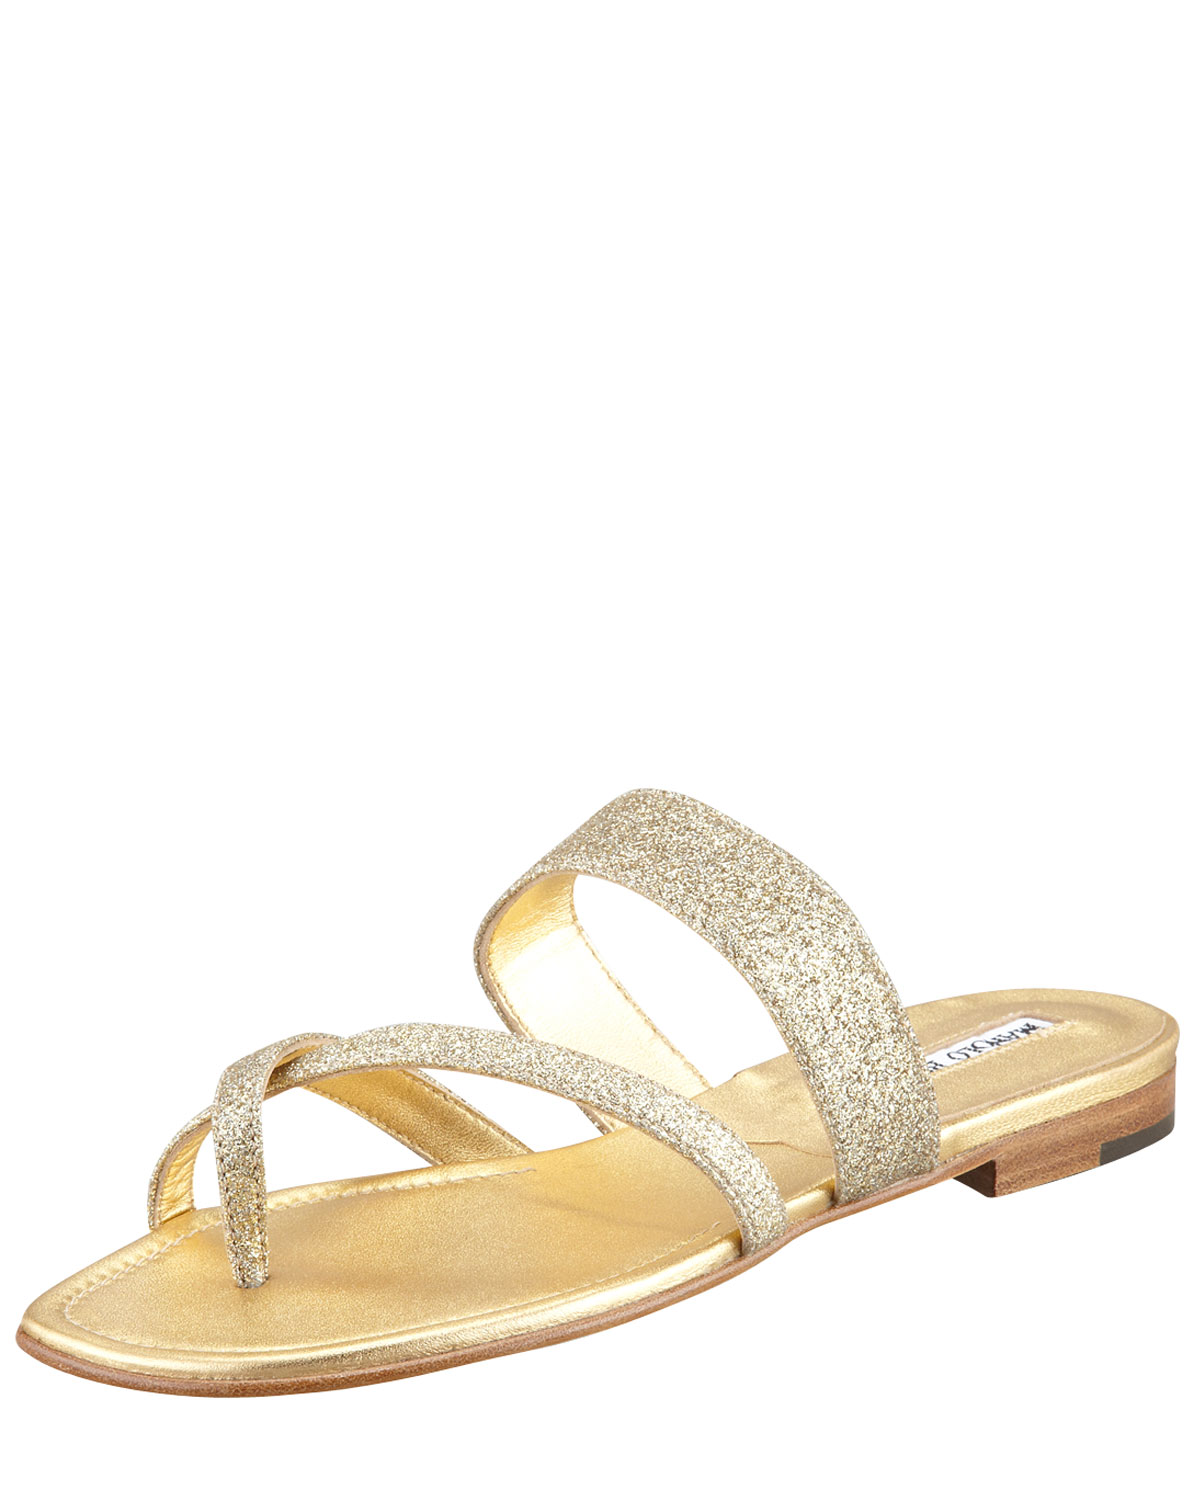 Manolo Blahnik Susa Flat Glitter Sandal Gold in Gold | Lyst